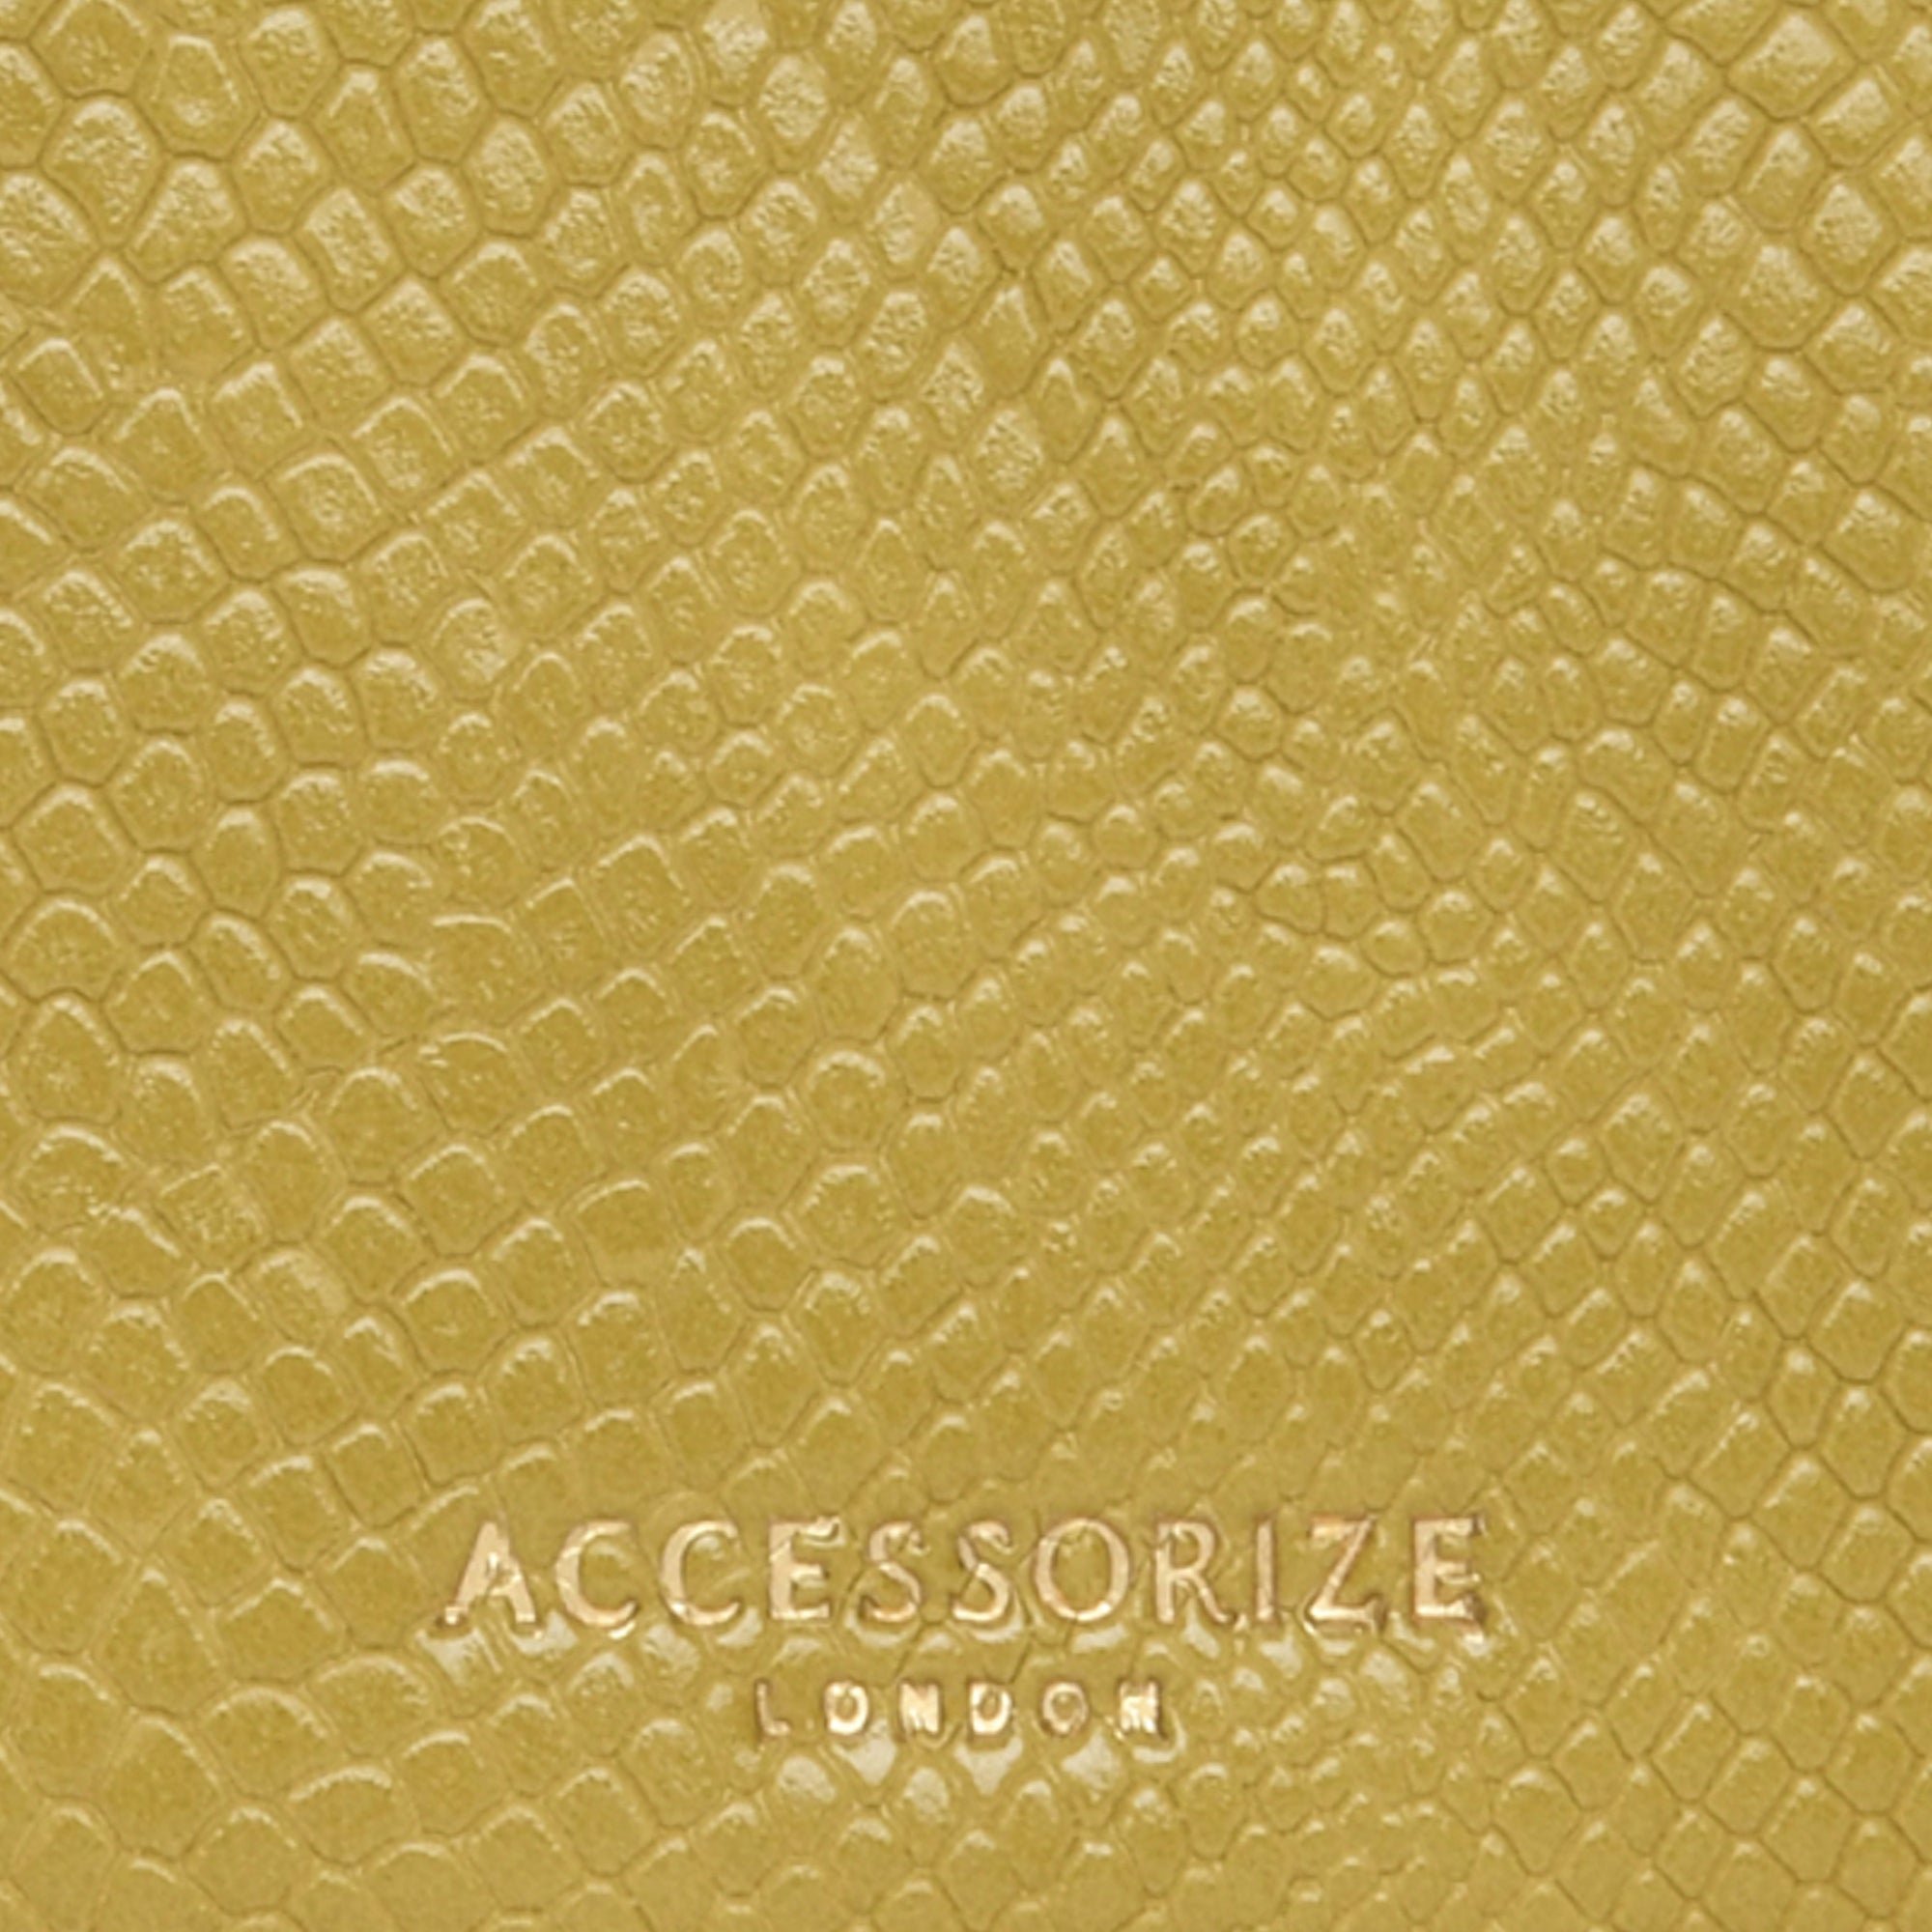 Accessorize London Women's Faux Leather Lime Crescent Coin Purse